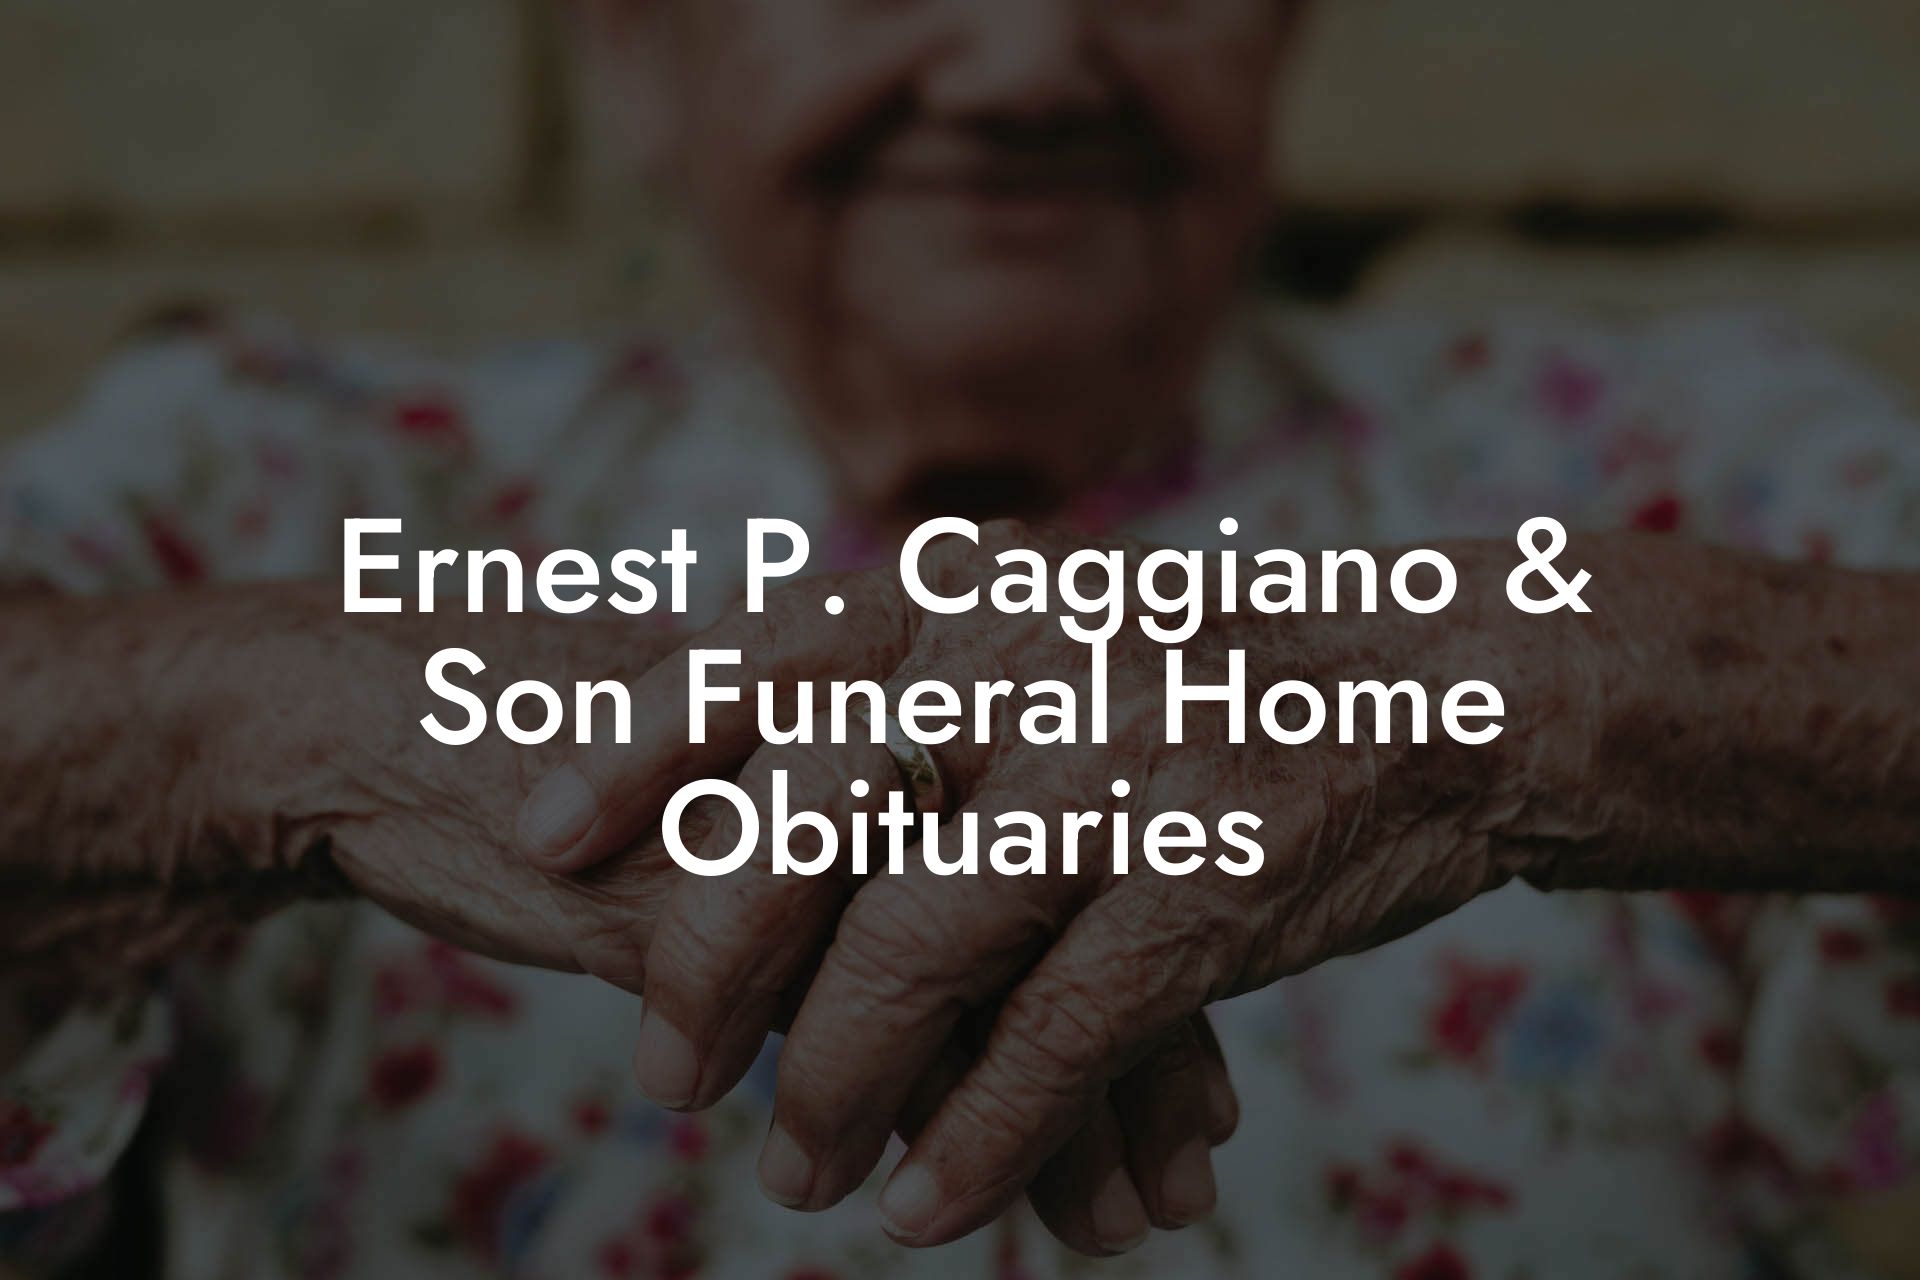 Ernest P. Caggiano & Son Funeral Home Obituaries